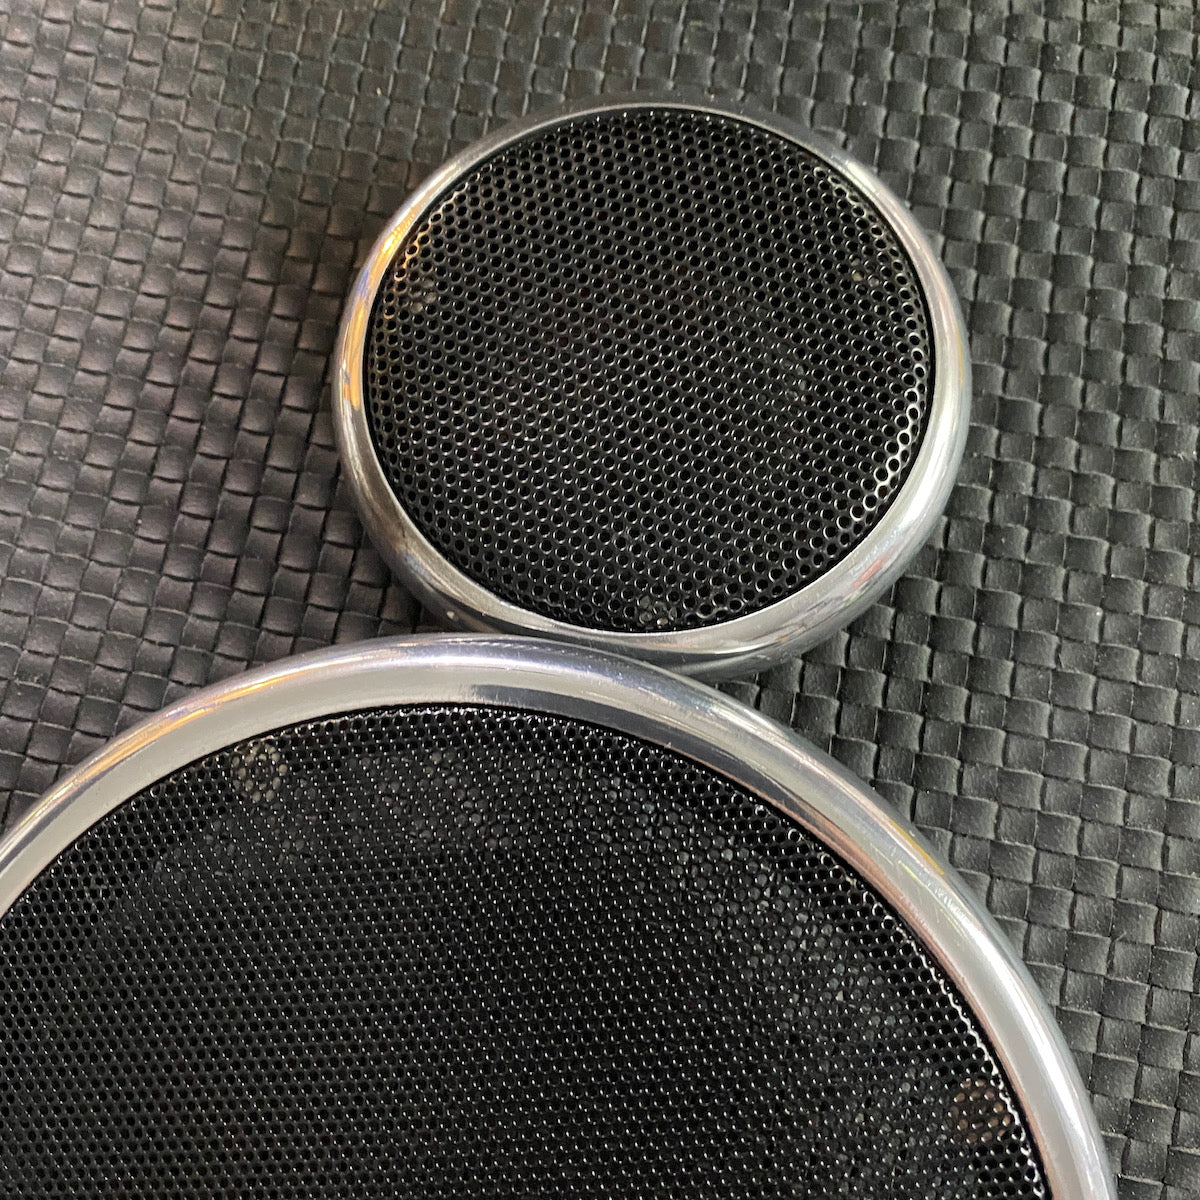 Solid Aluminum Speaker Trim Rings and Grills - Ächtung Kraft